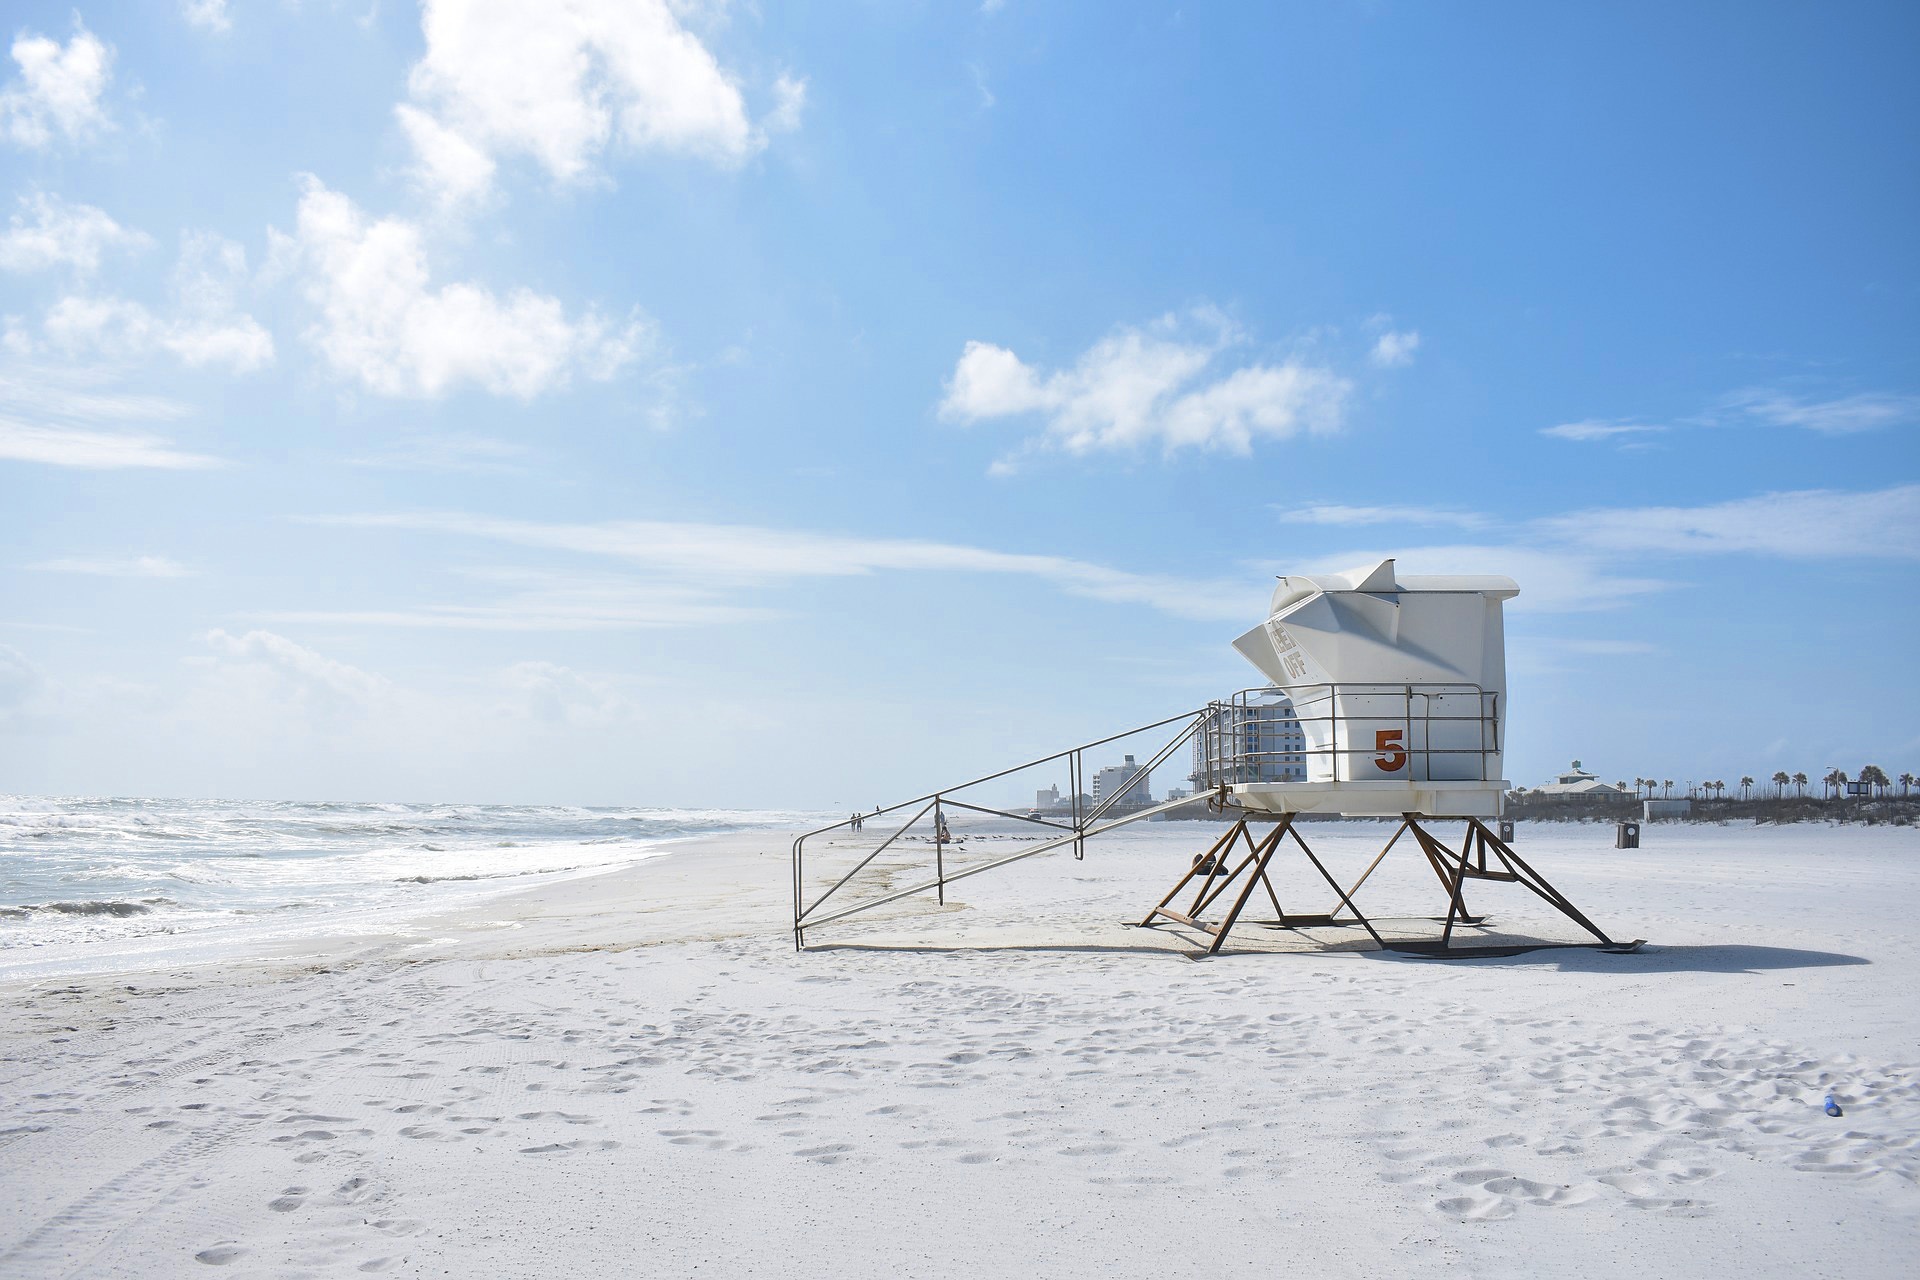 Hütte der Strandaufsicht am Meer bei gutem Wetter.